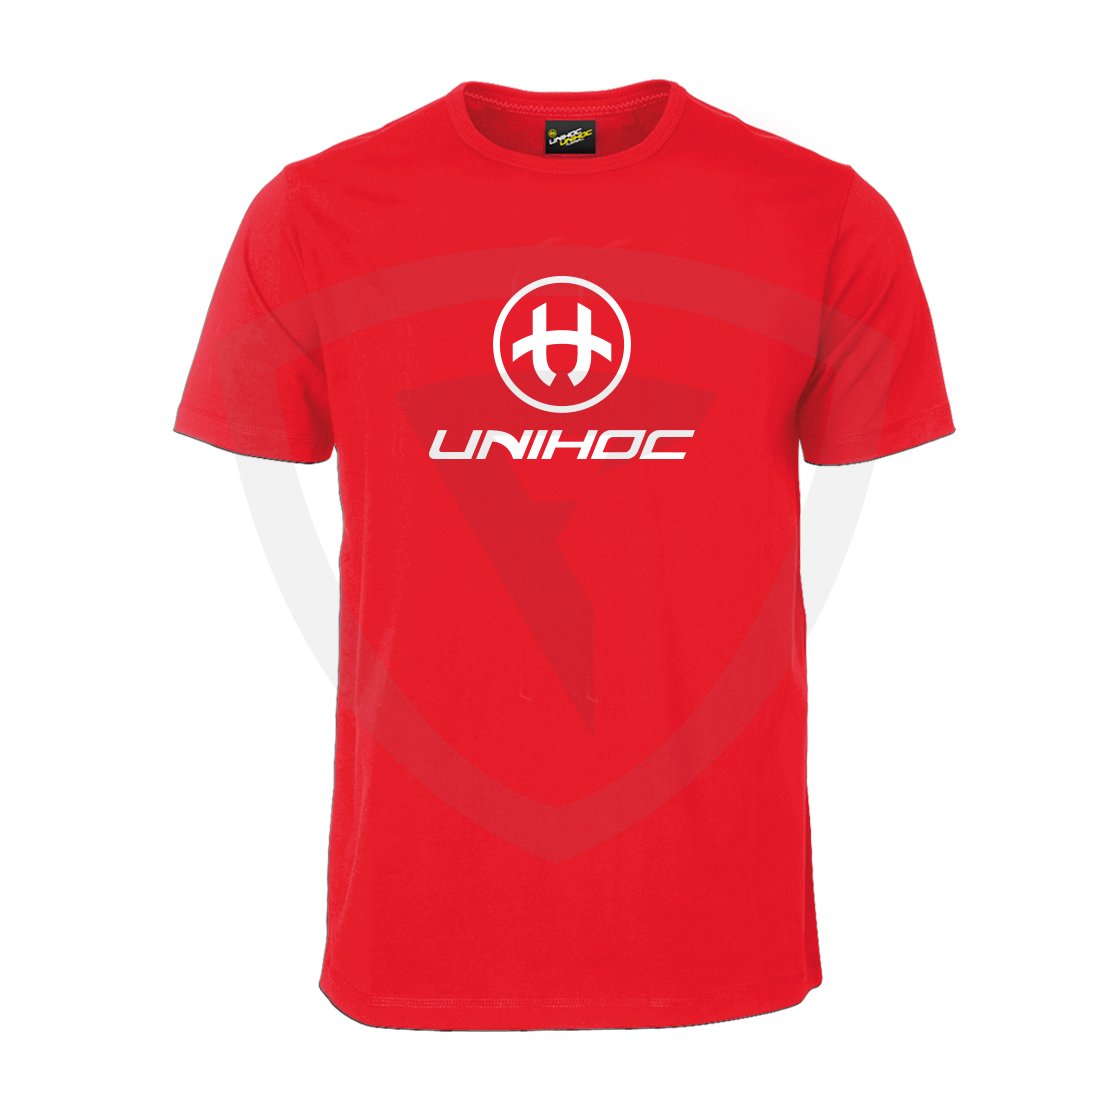 Unihoc T-shirt Storm Red SR. M červená